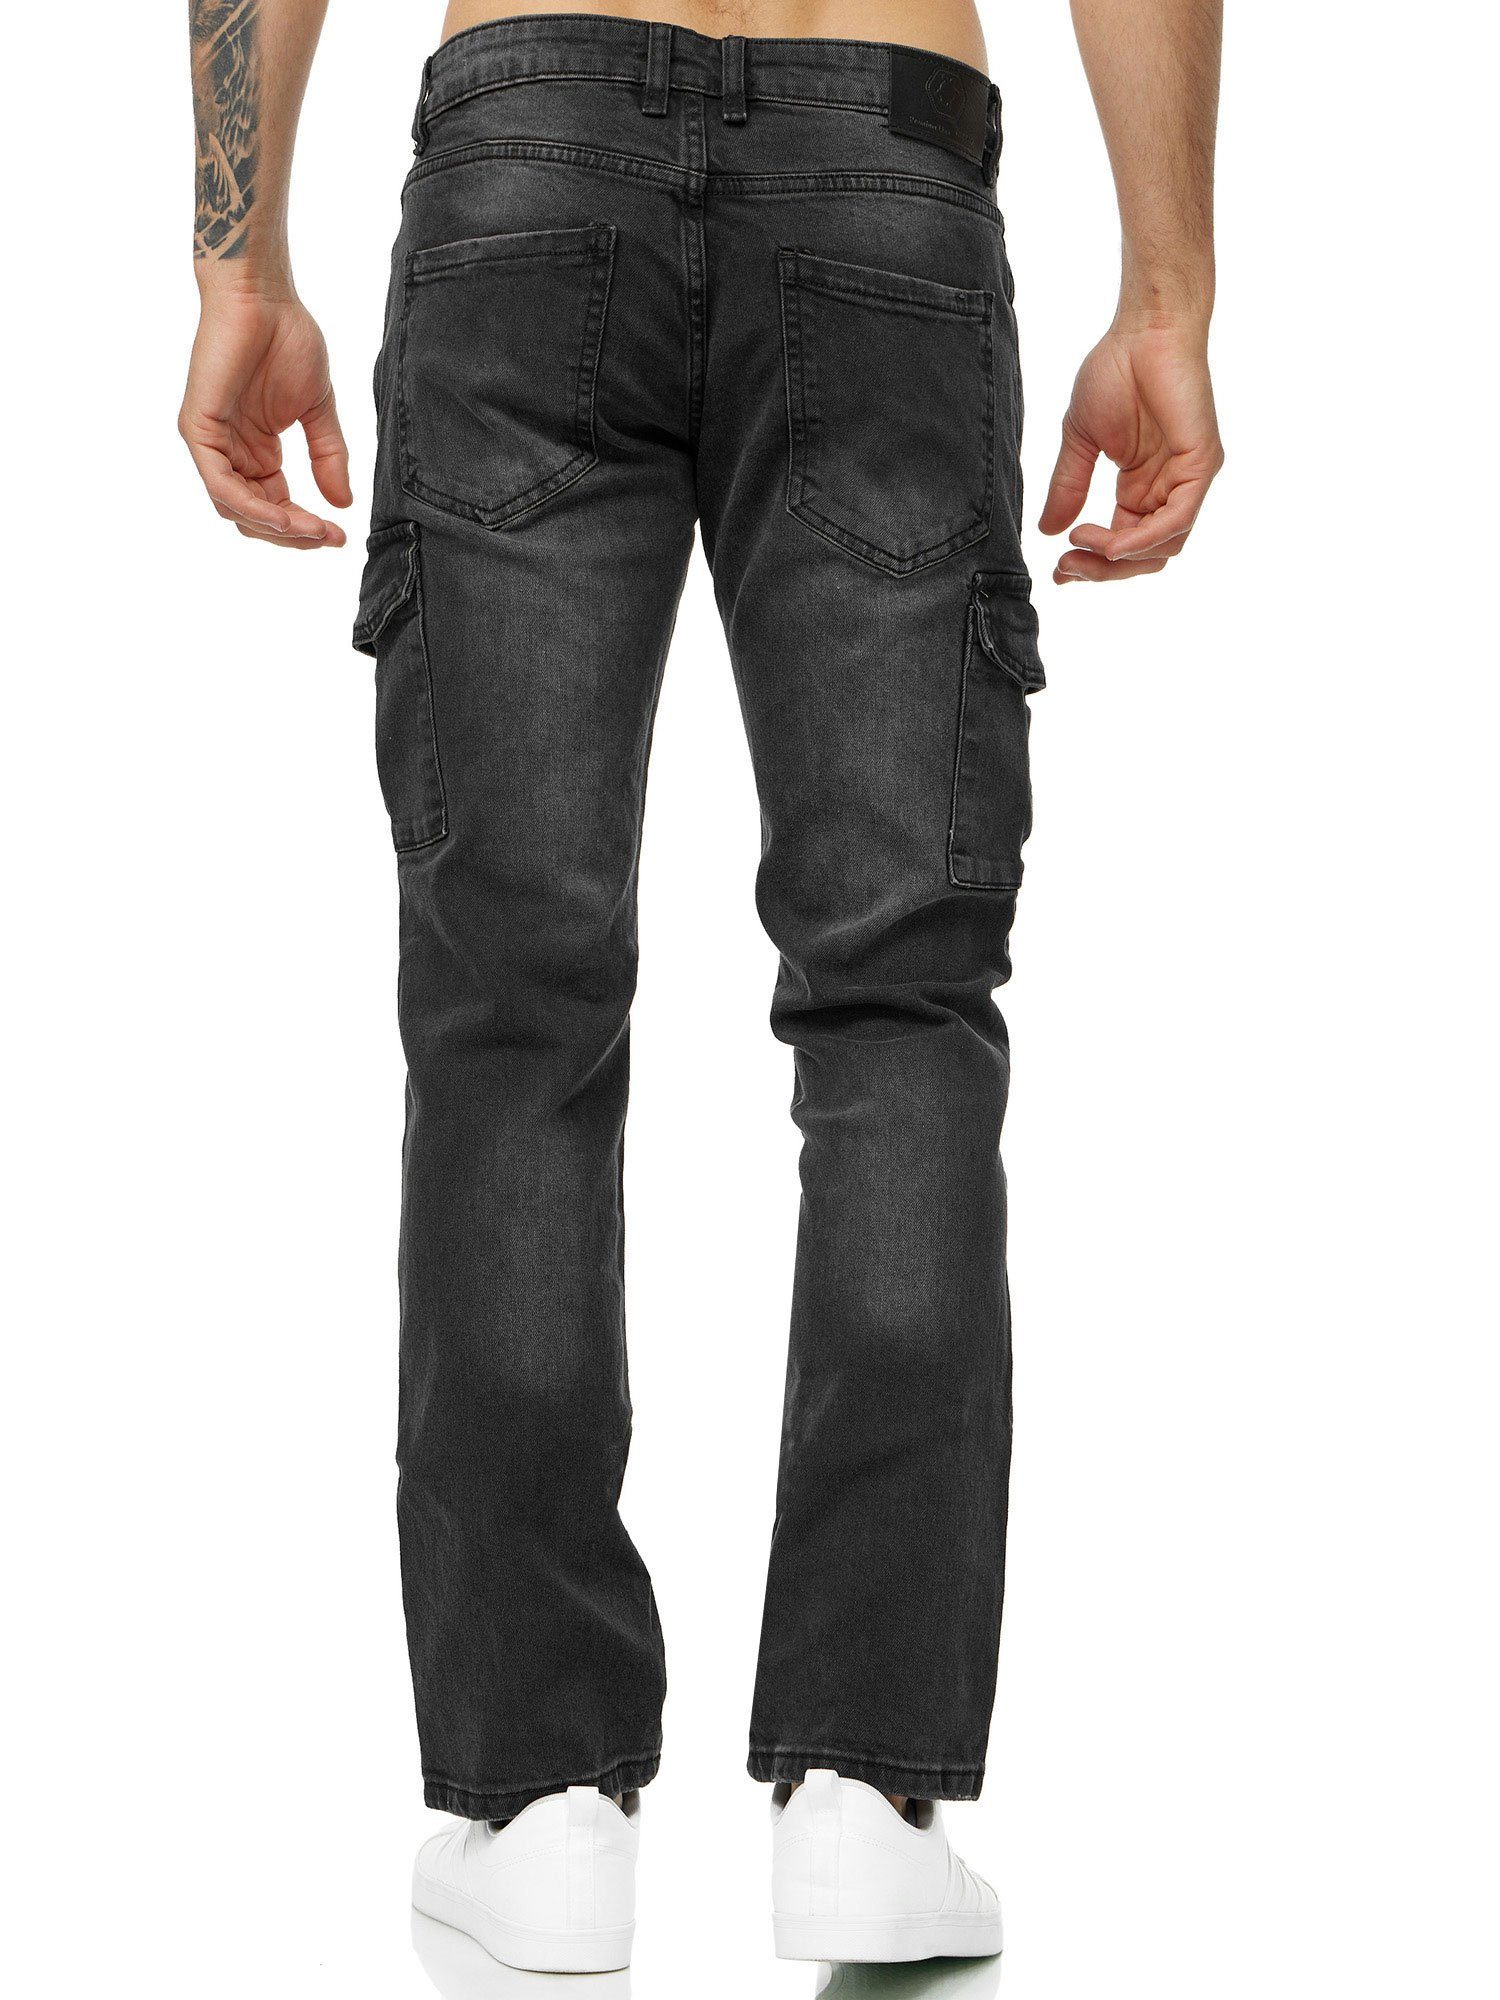 A104 Regular Straight-Jeans Denim Jeans Hose Tazzio schwarz Fit Cargo